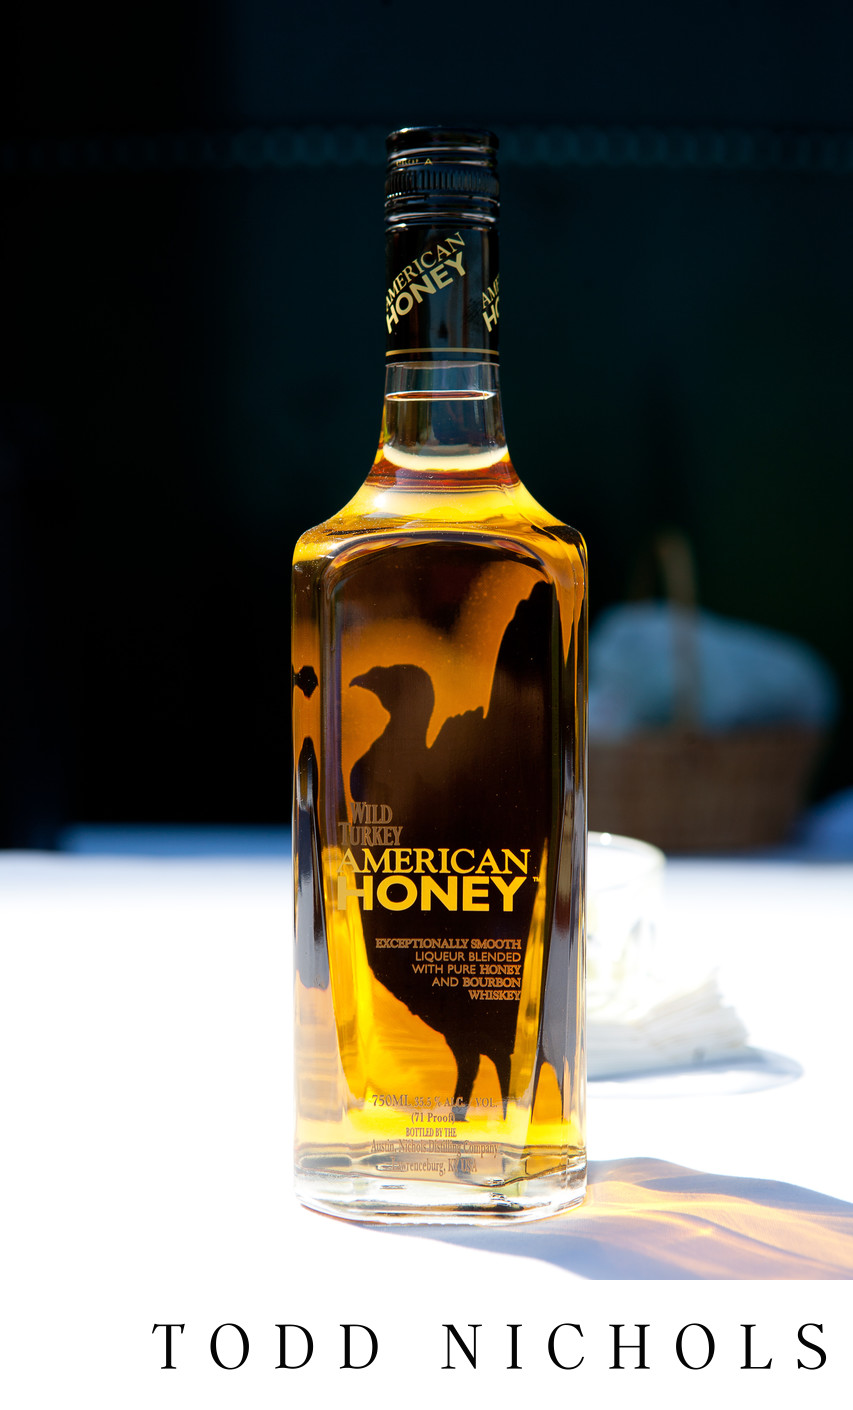 American Honey Wild Turkey Bottle